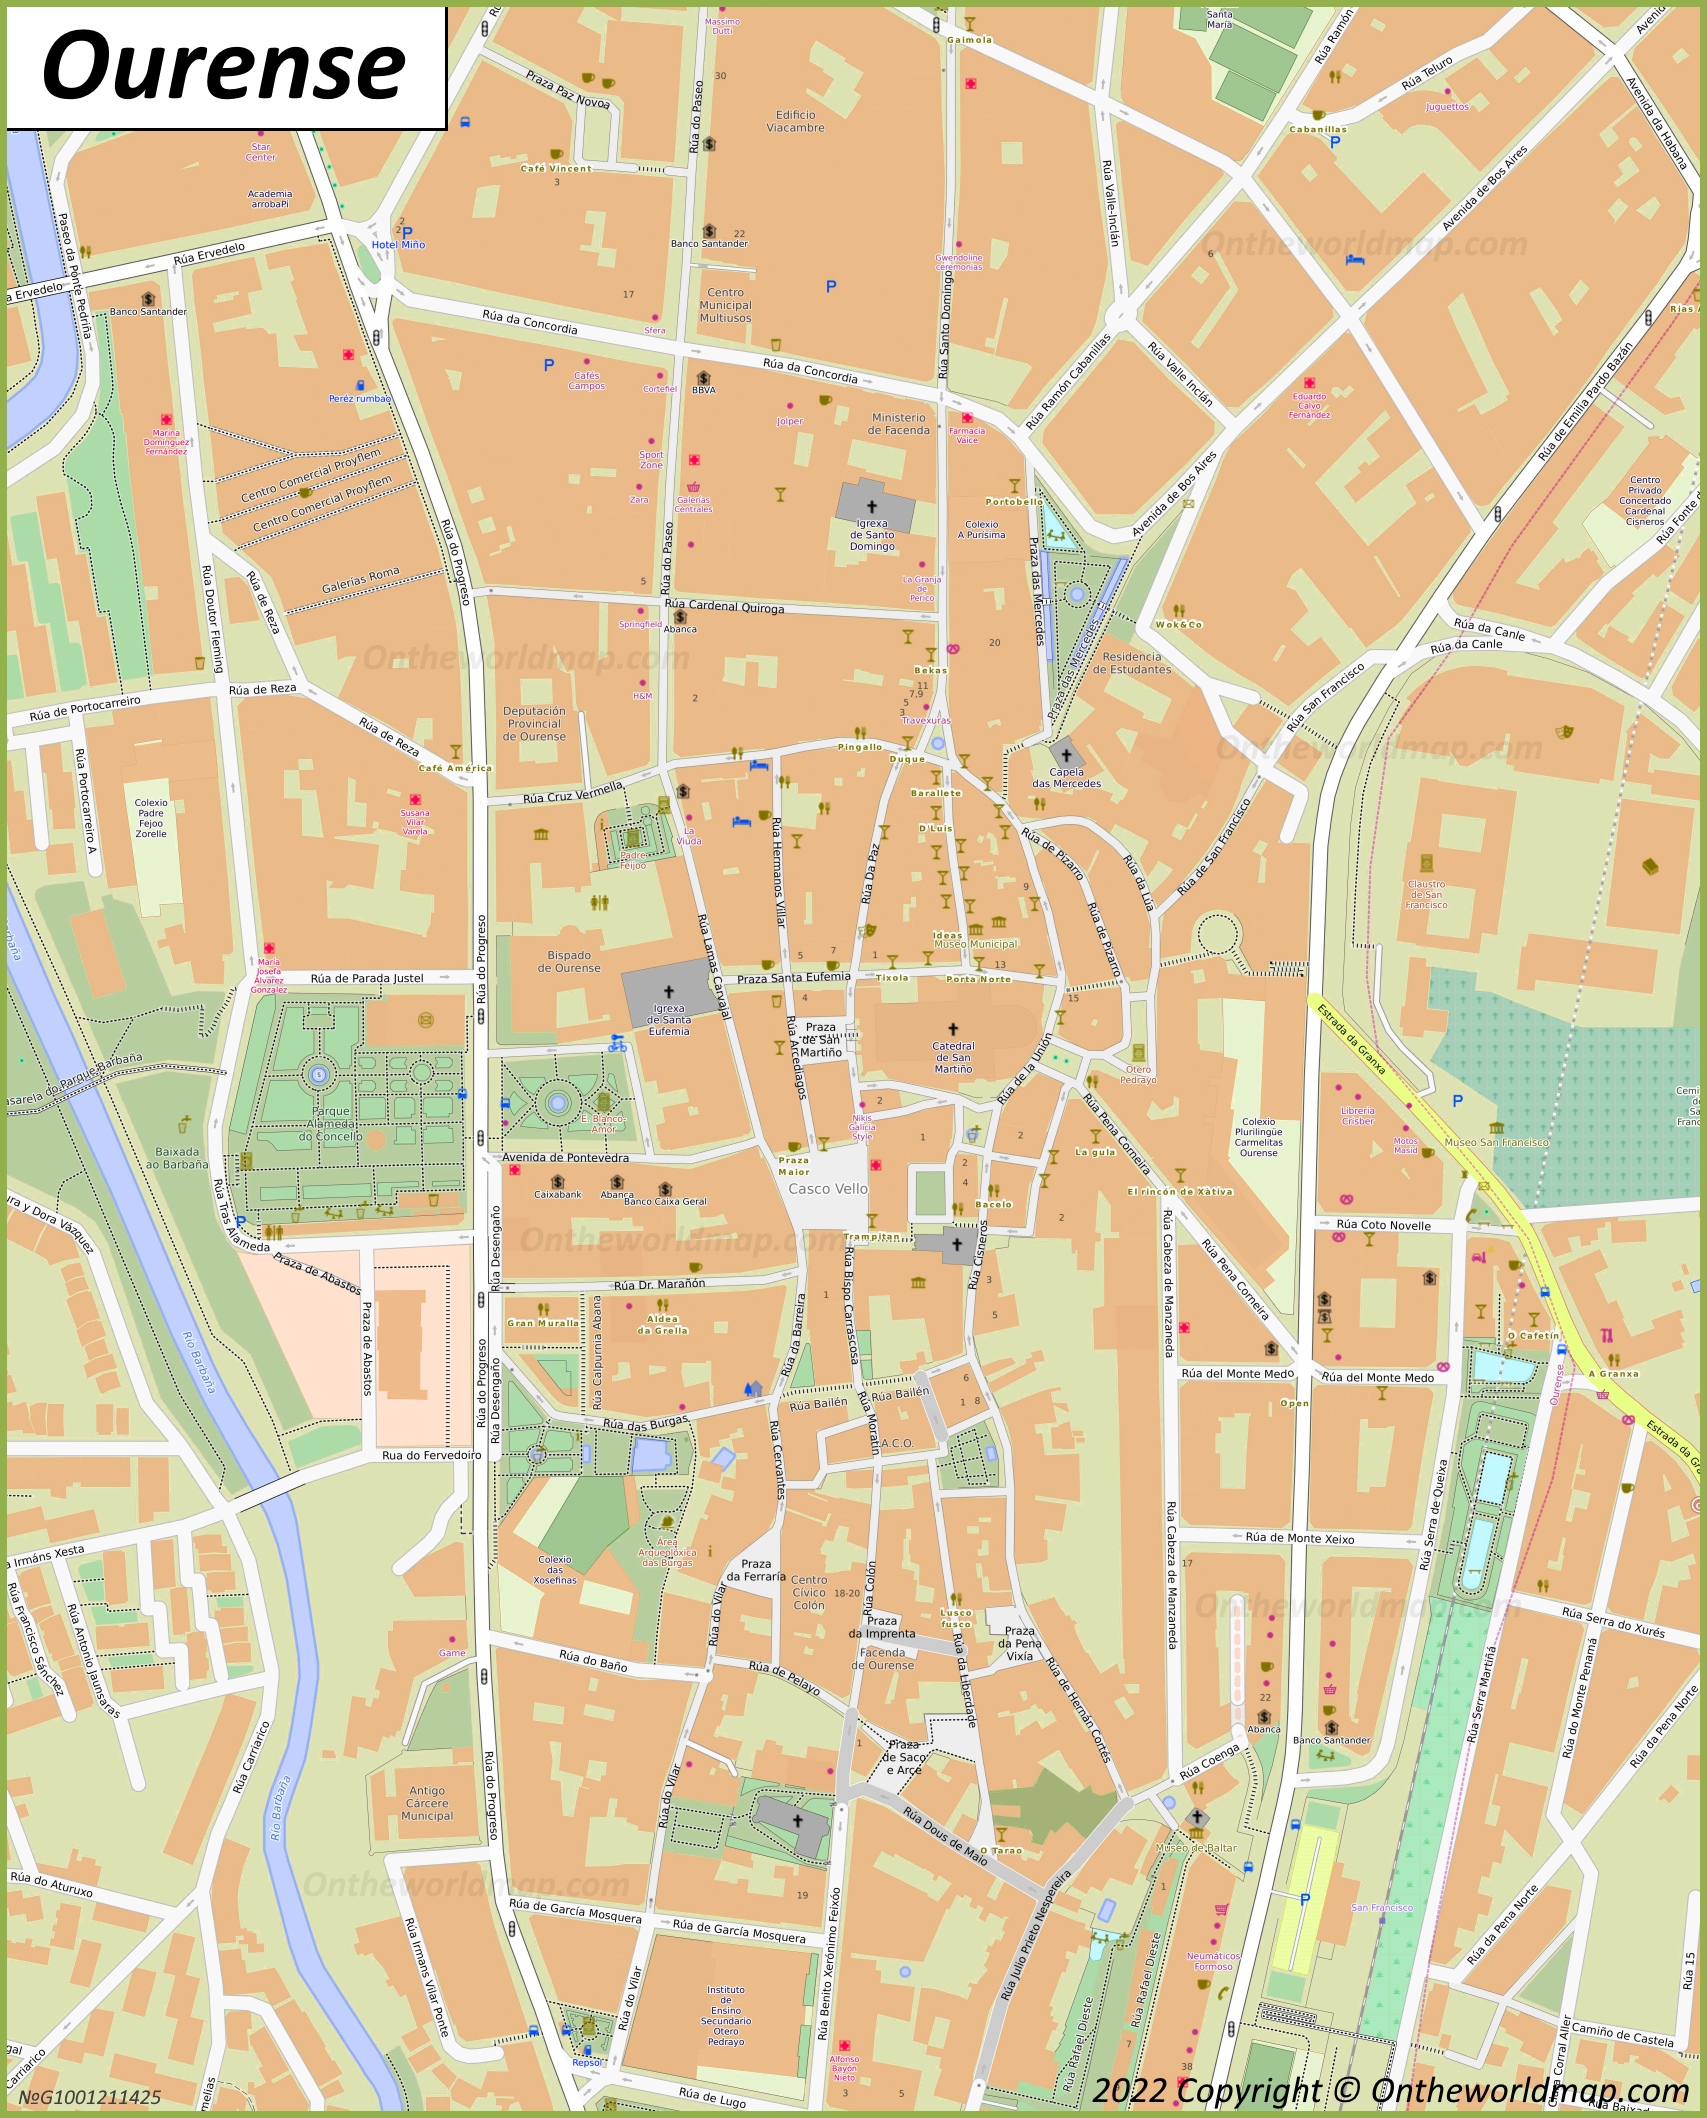 Mapa de la ciudad alta de Orense